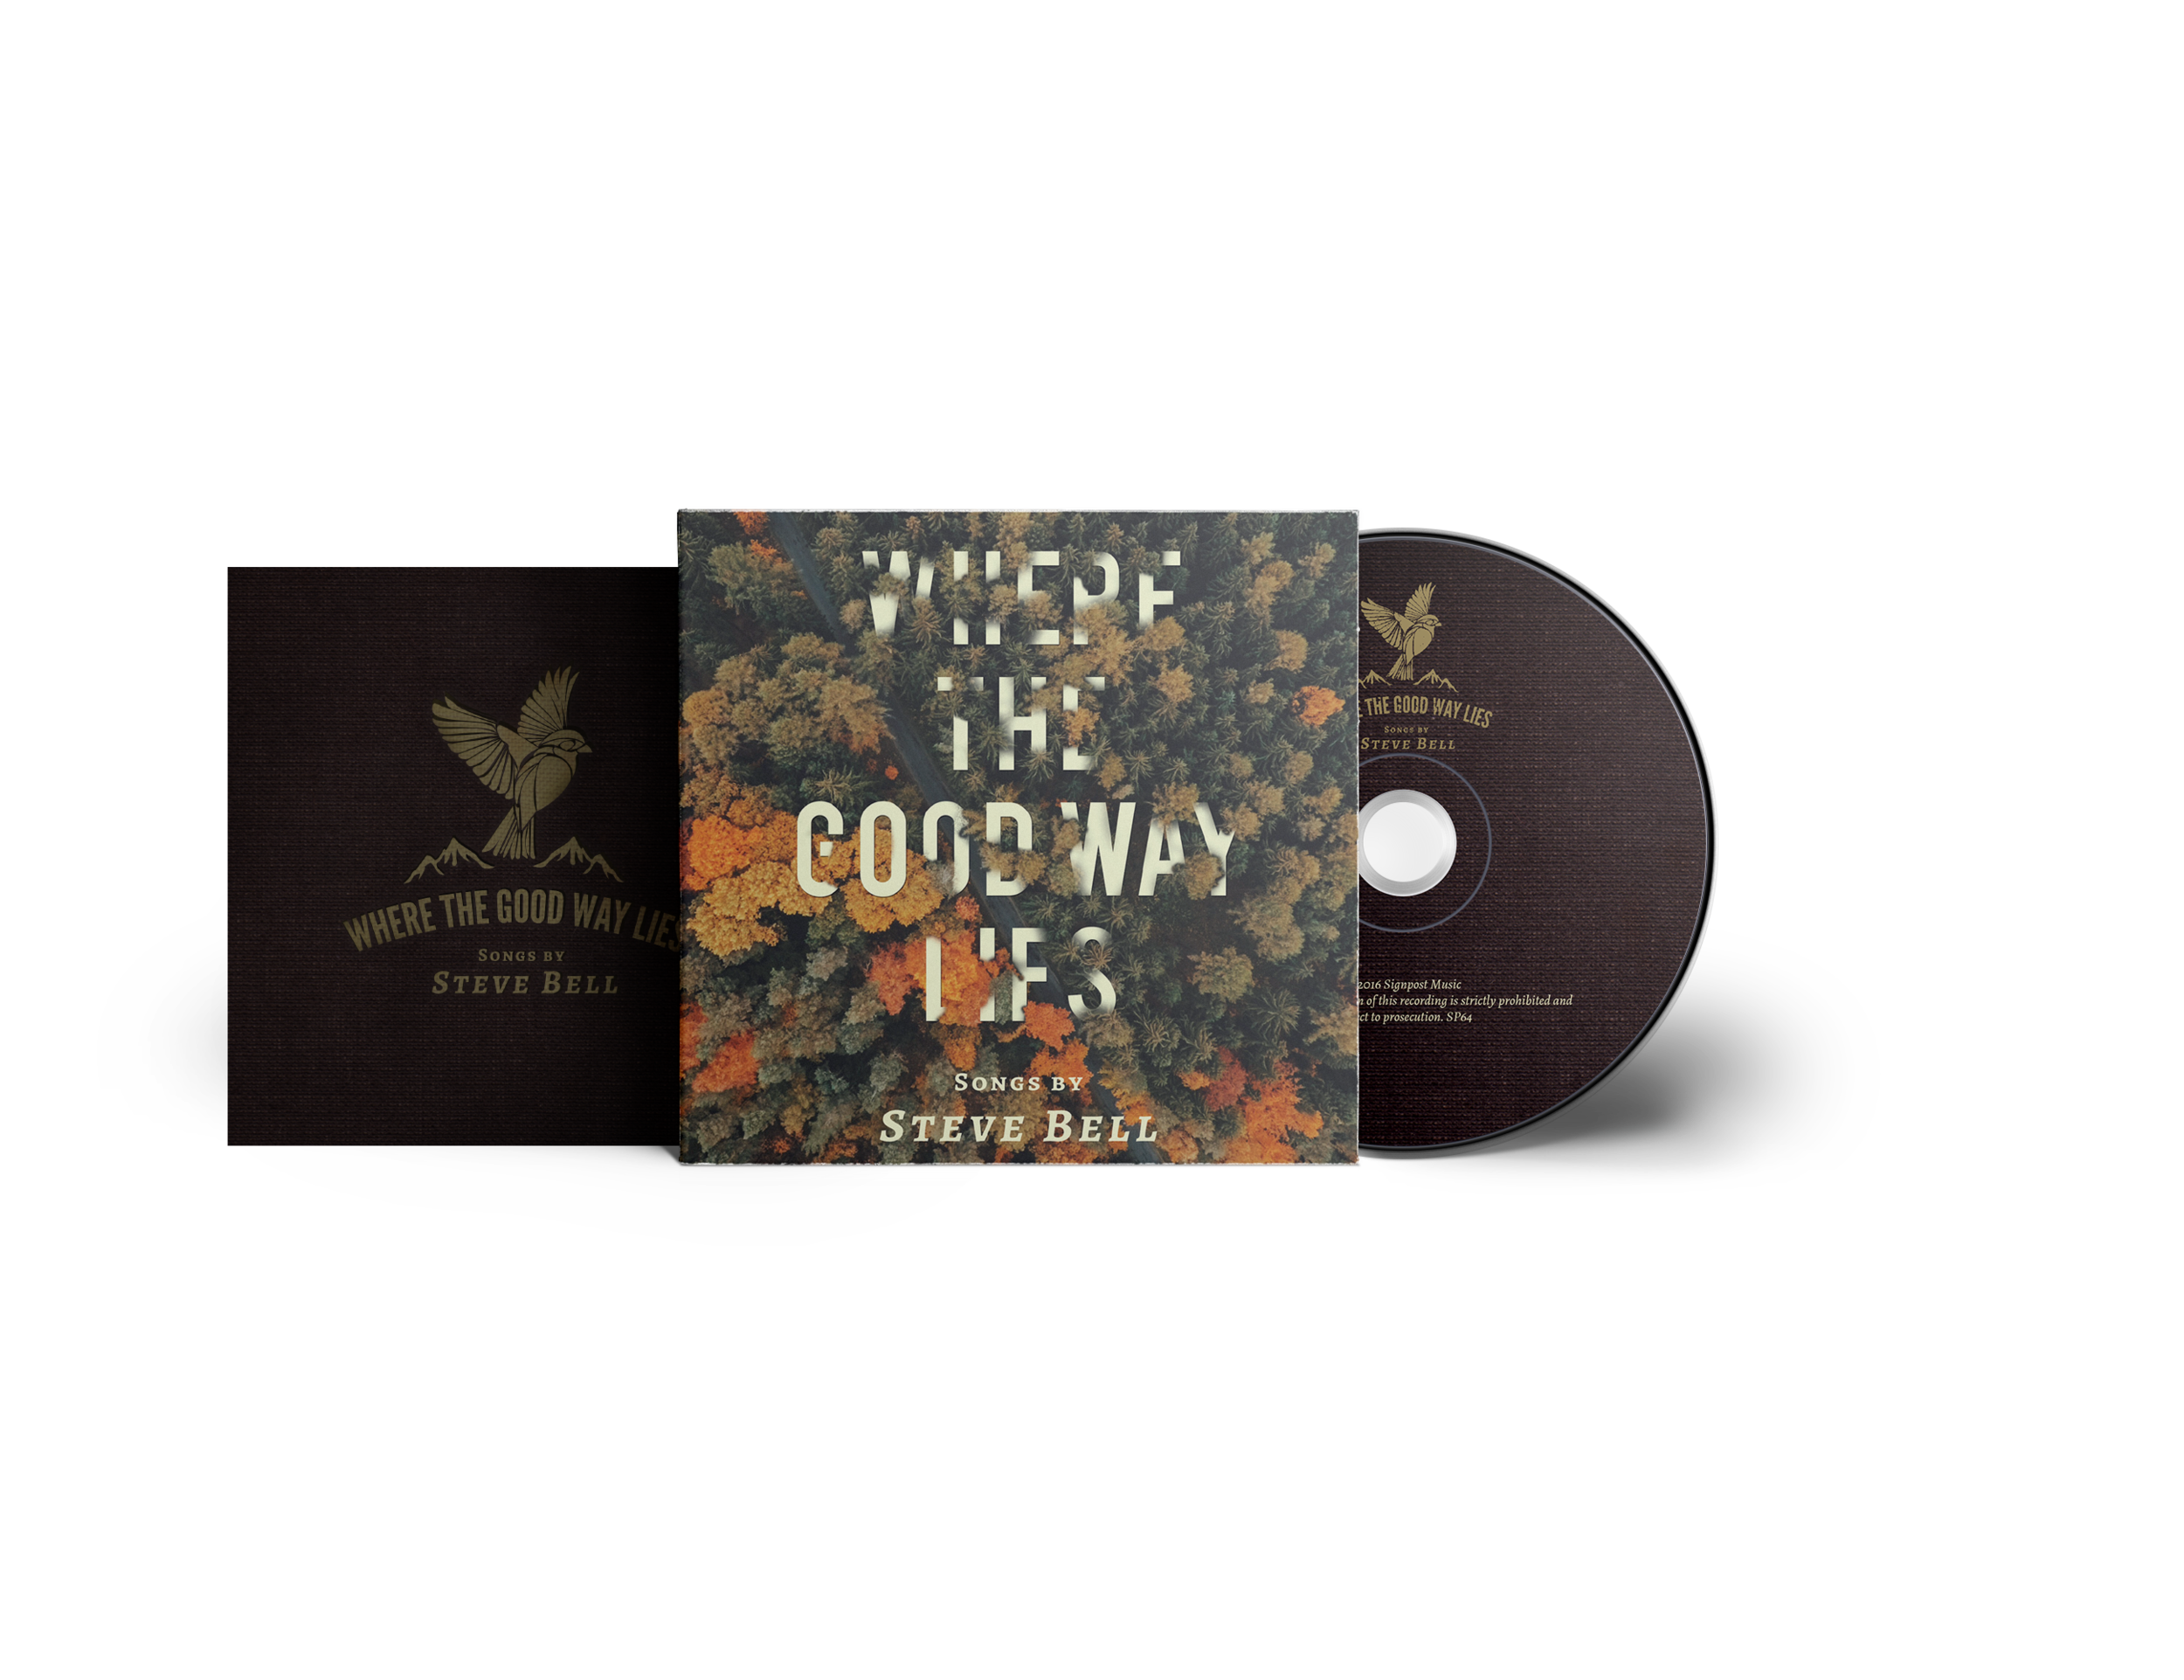 Where The Good Way Lies — By Steve Bell